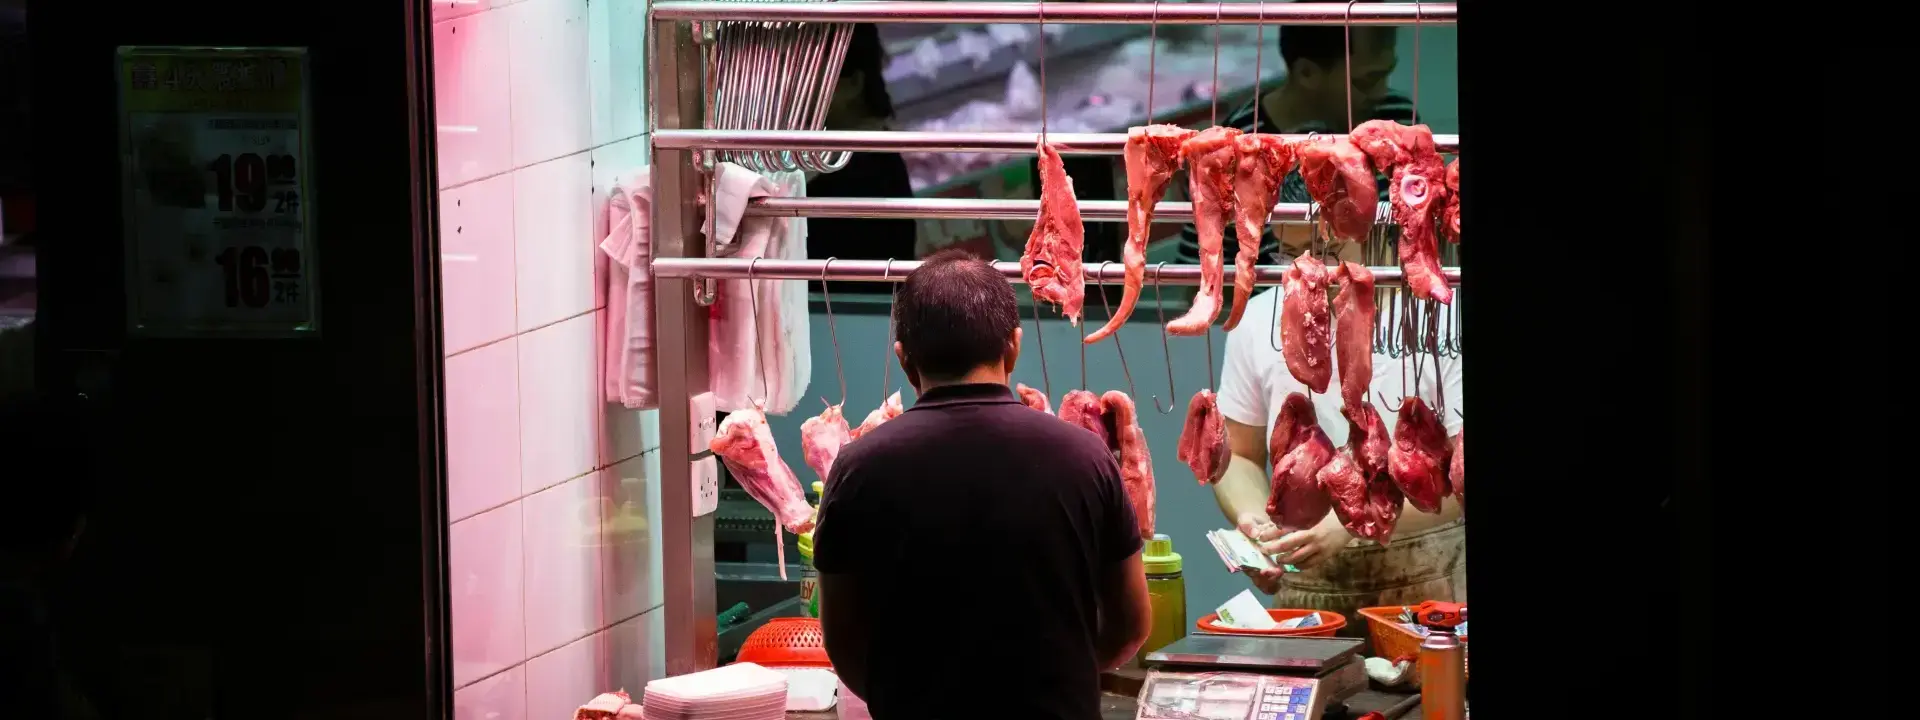 Butcher Staff in Portugal